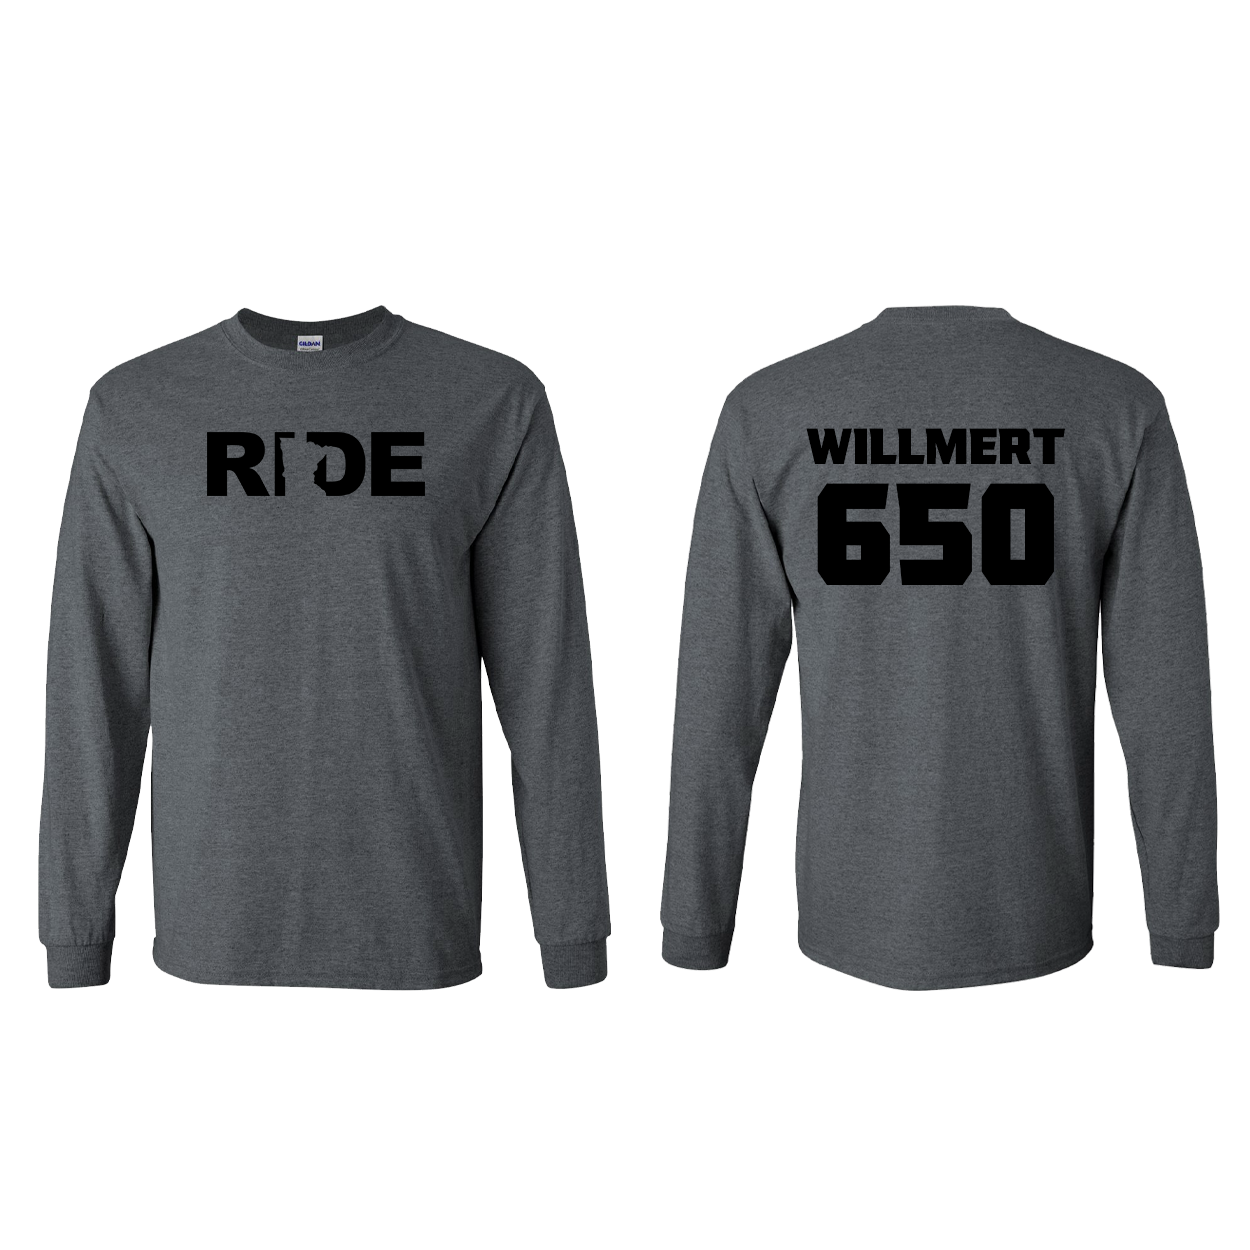 FXR BMX Race Team Classic Athlete Support Long Sleeve Shirt J. WILLMERT #650 Dark Heather (Black Logo)